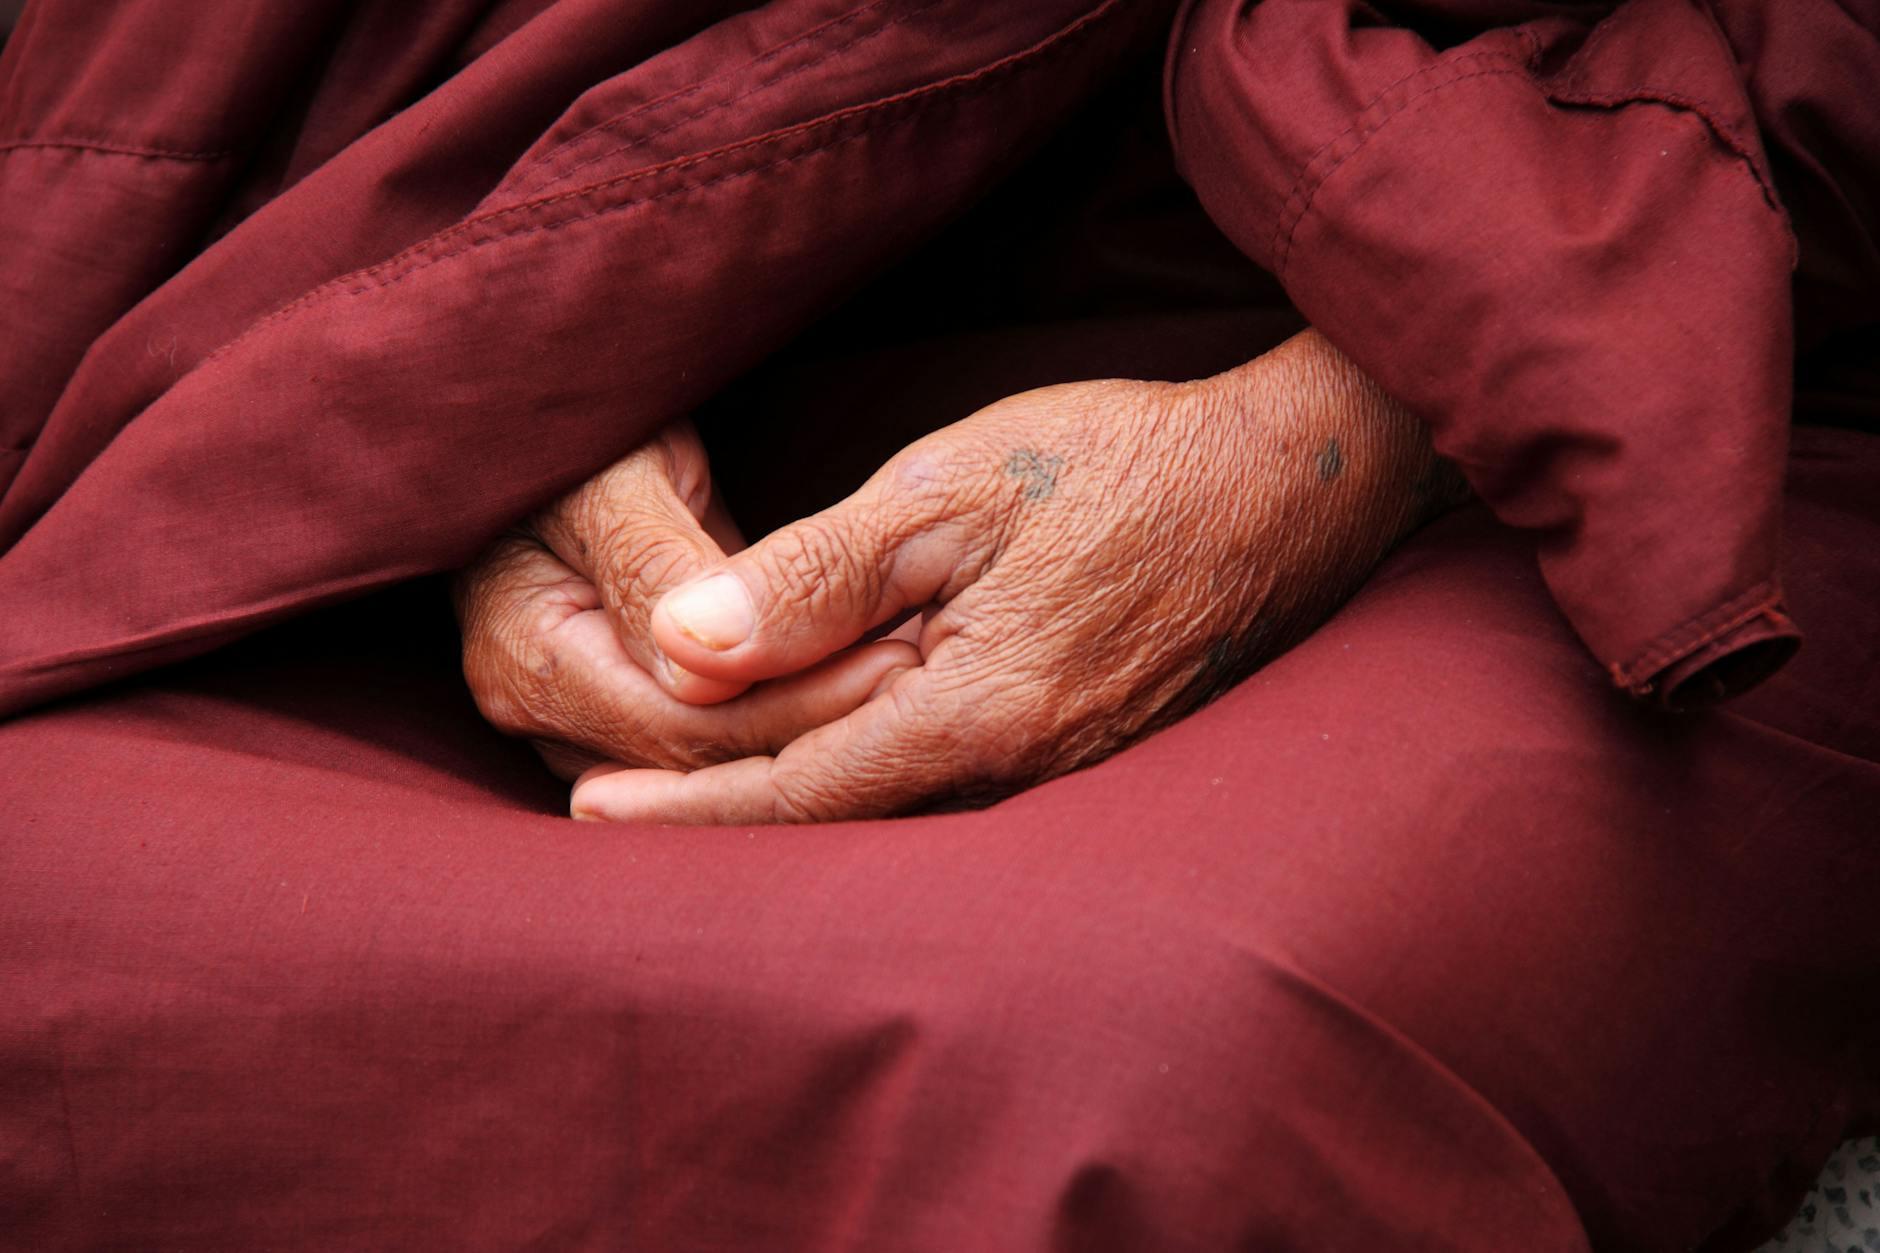 7. Start each day like a Buddhist monk.